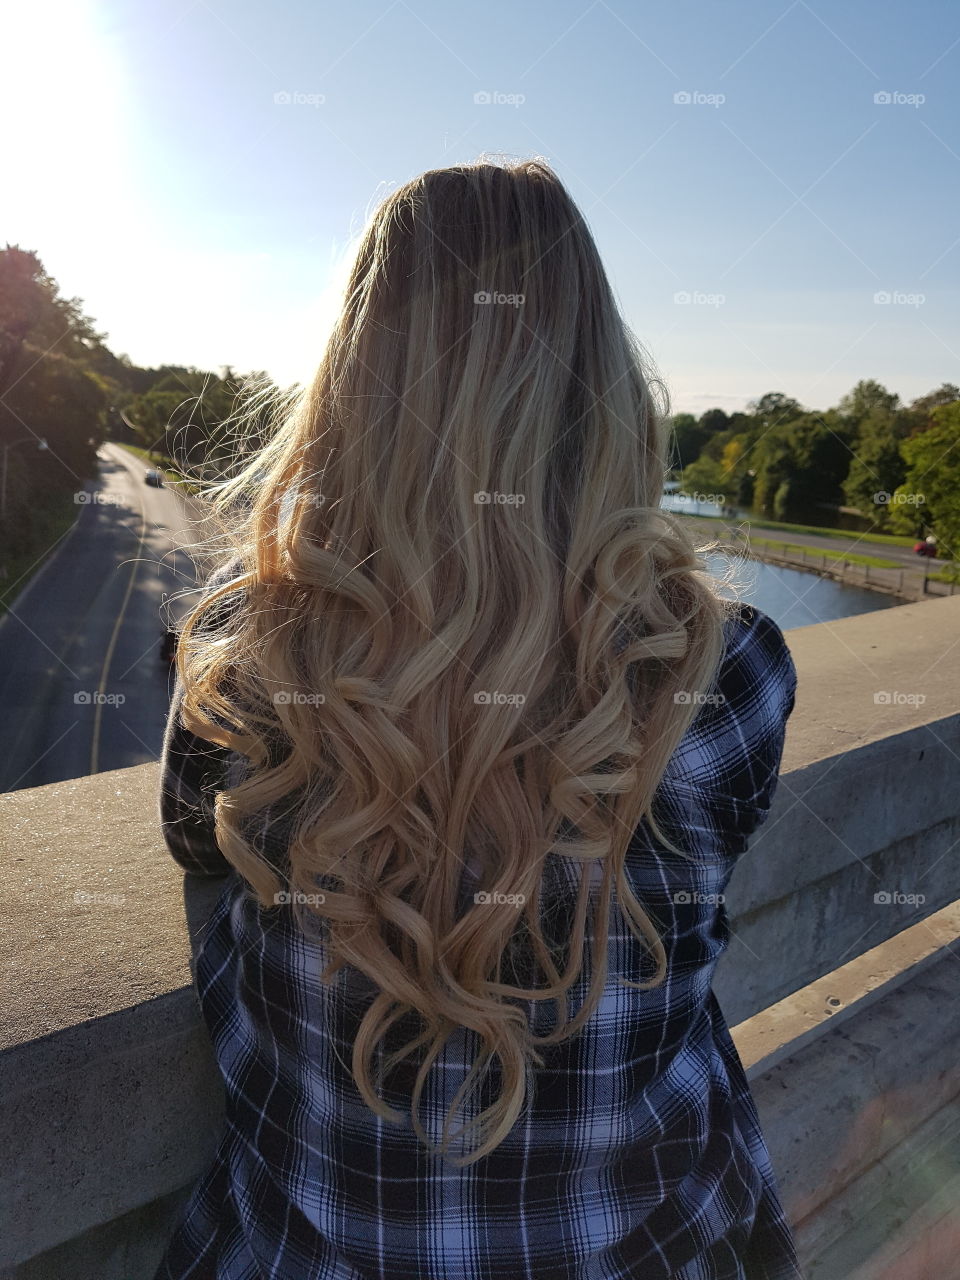 Beautiful curled blonde hair